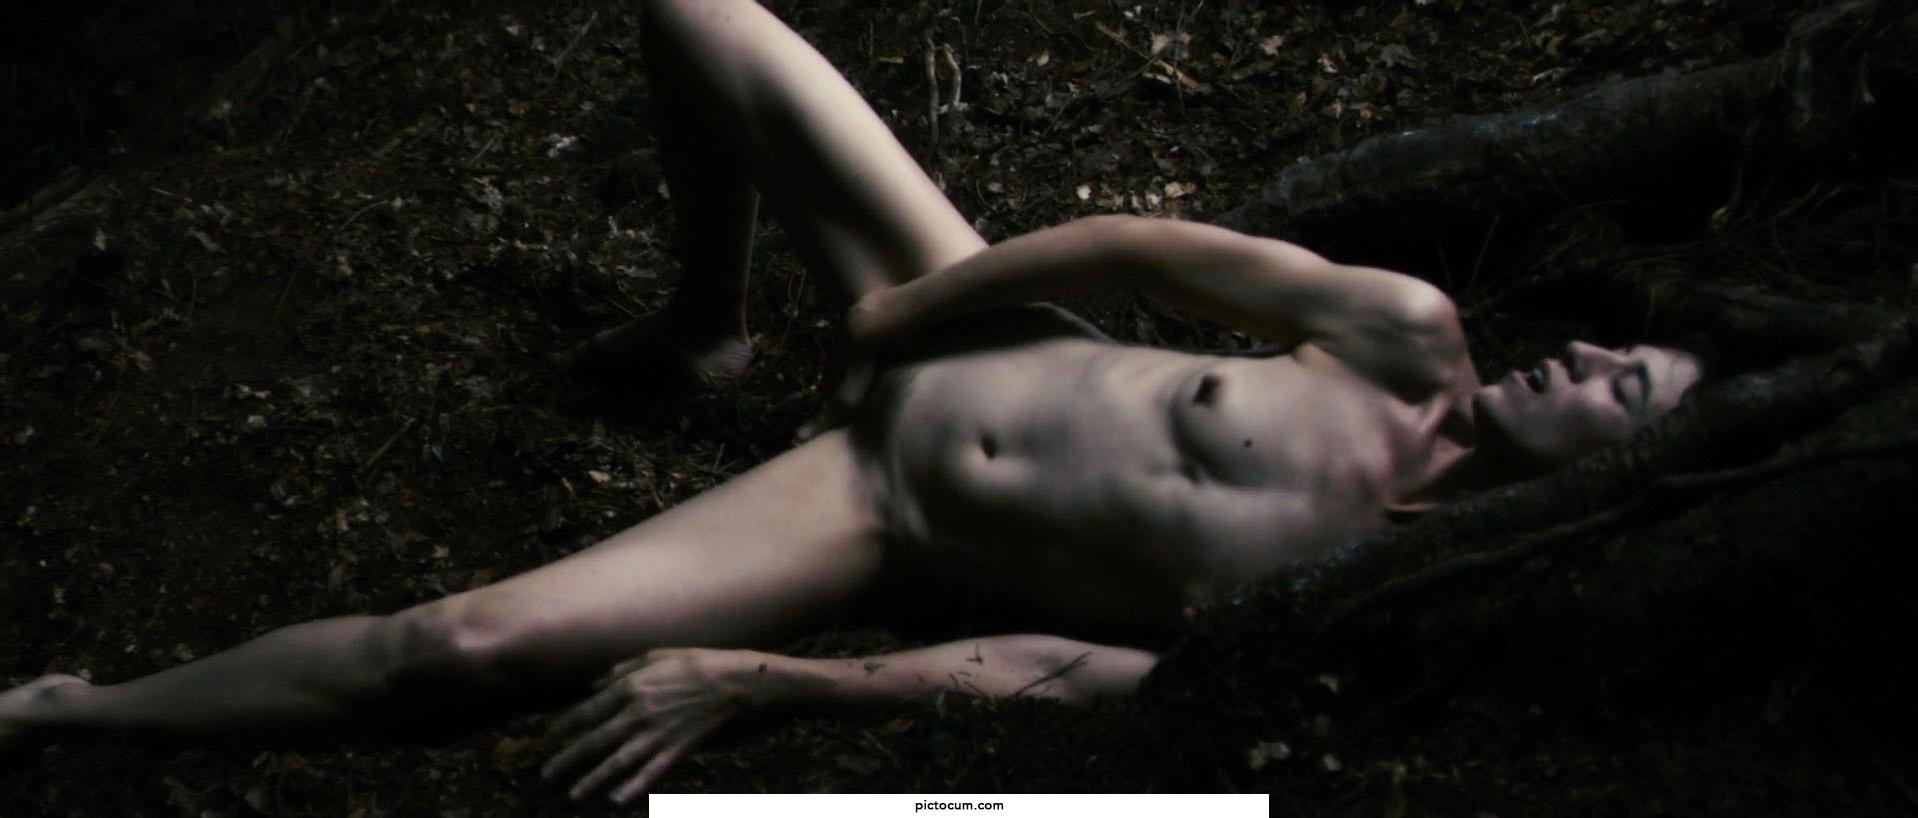 Charlotte Gainsbourgh, “Antichrist” -2009